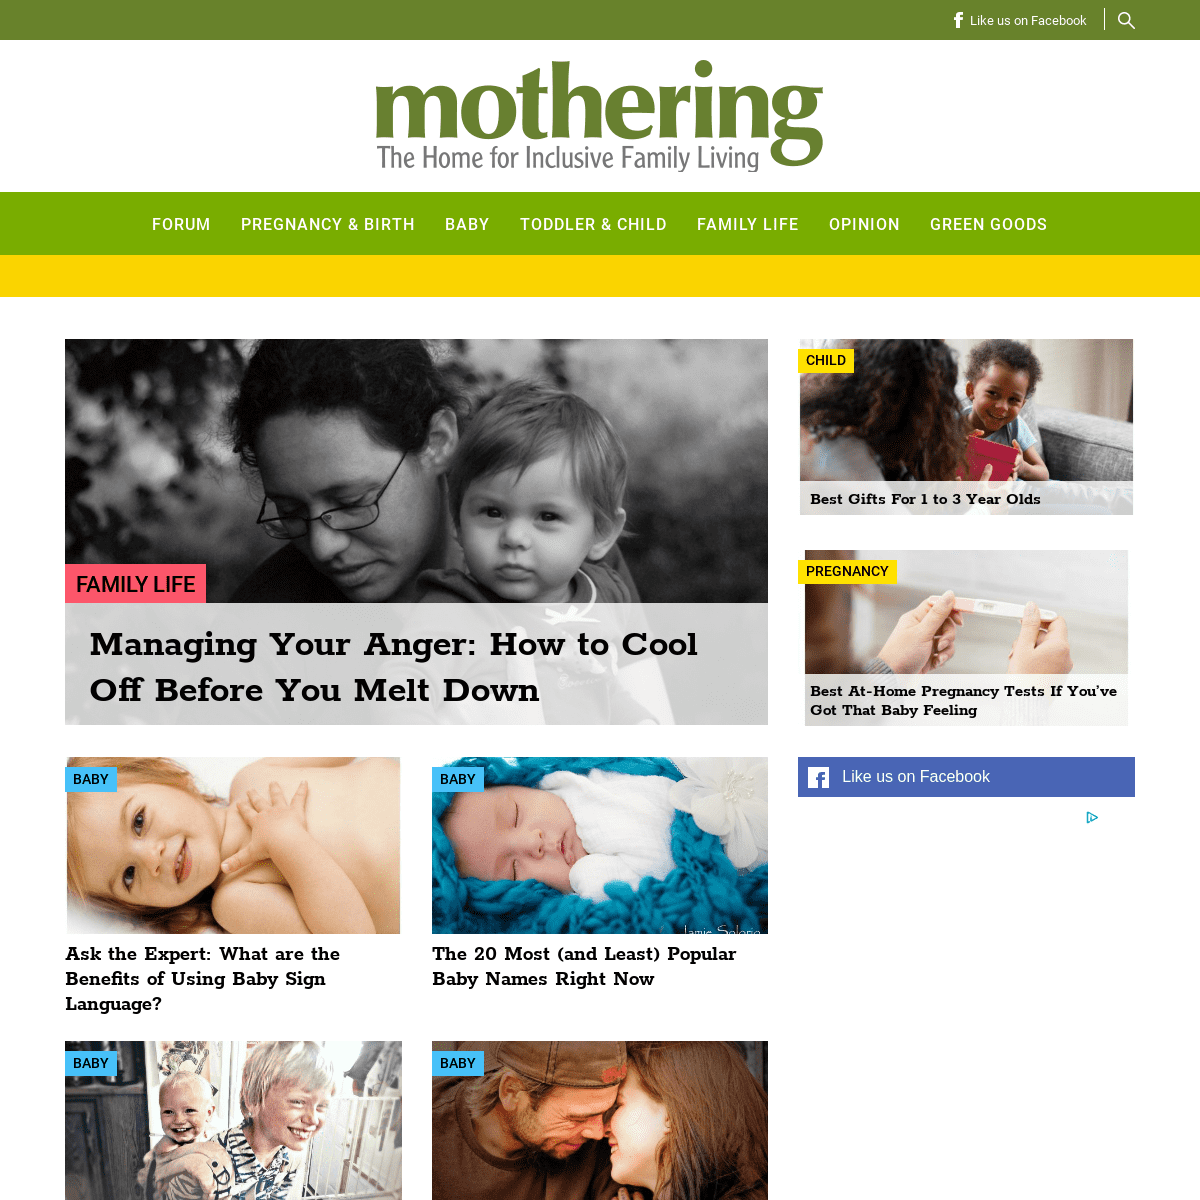 A complete backup of mothering.com